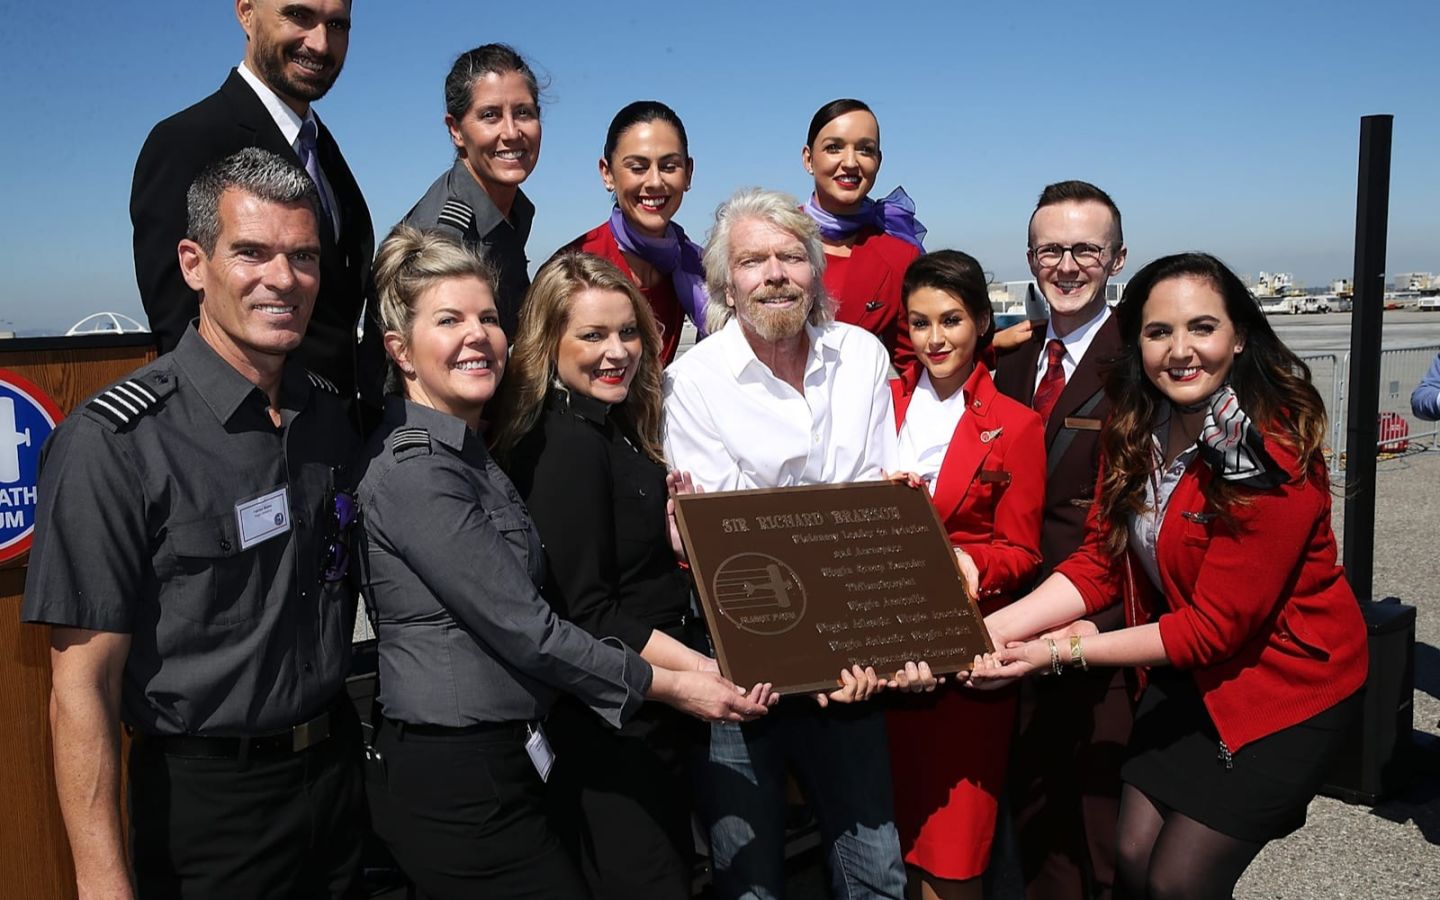 Richard Branson with Virgin Atlantic crew members 